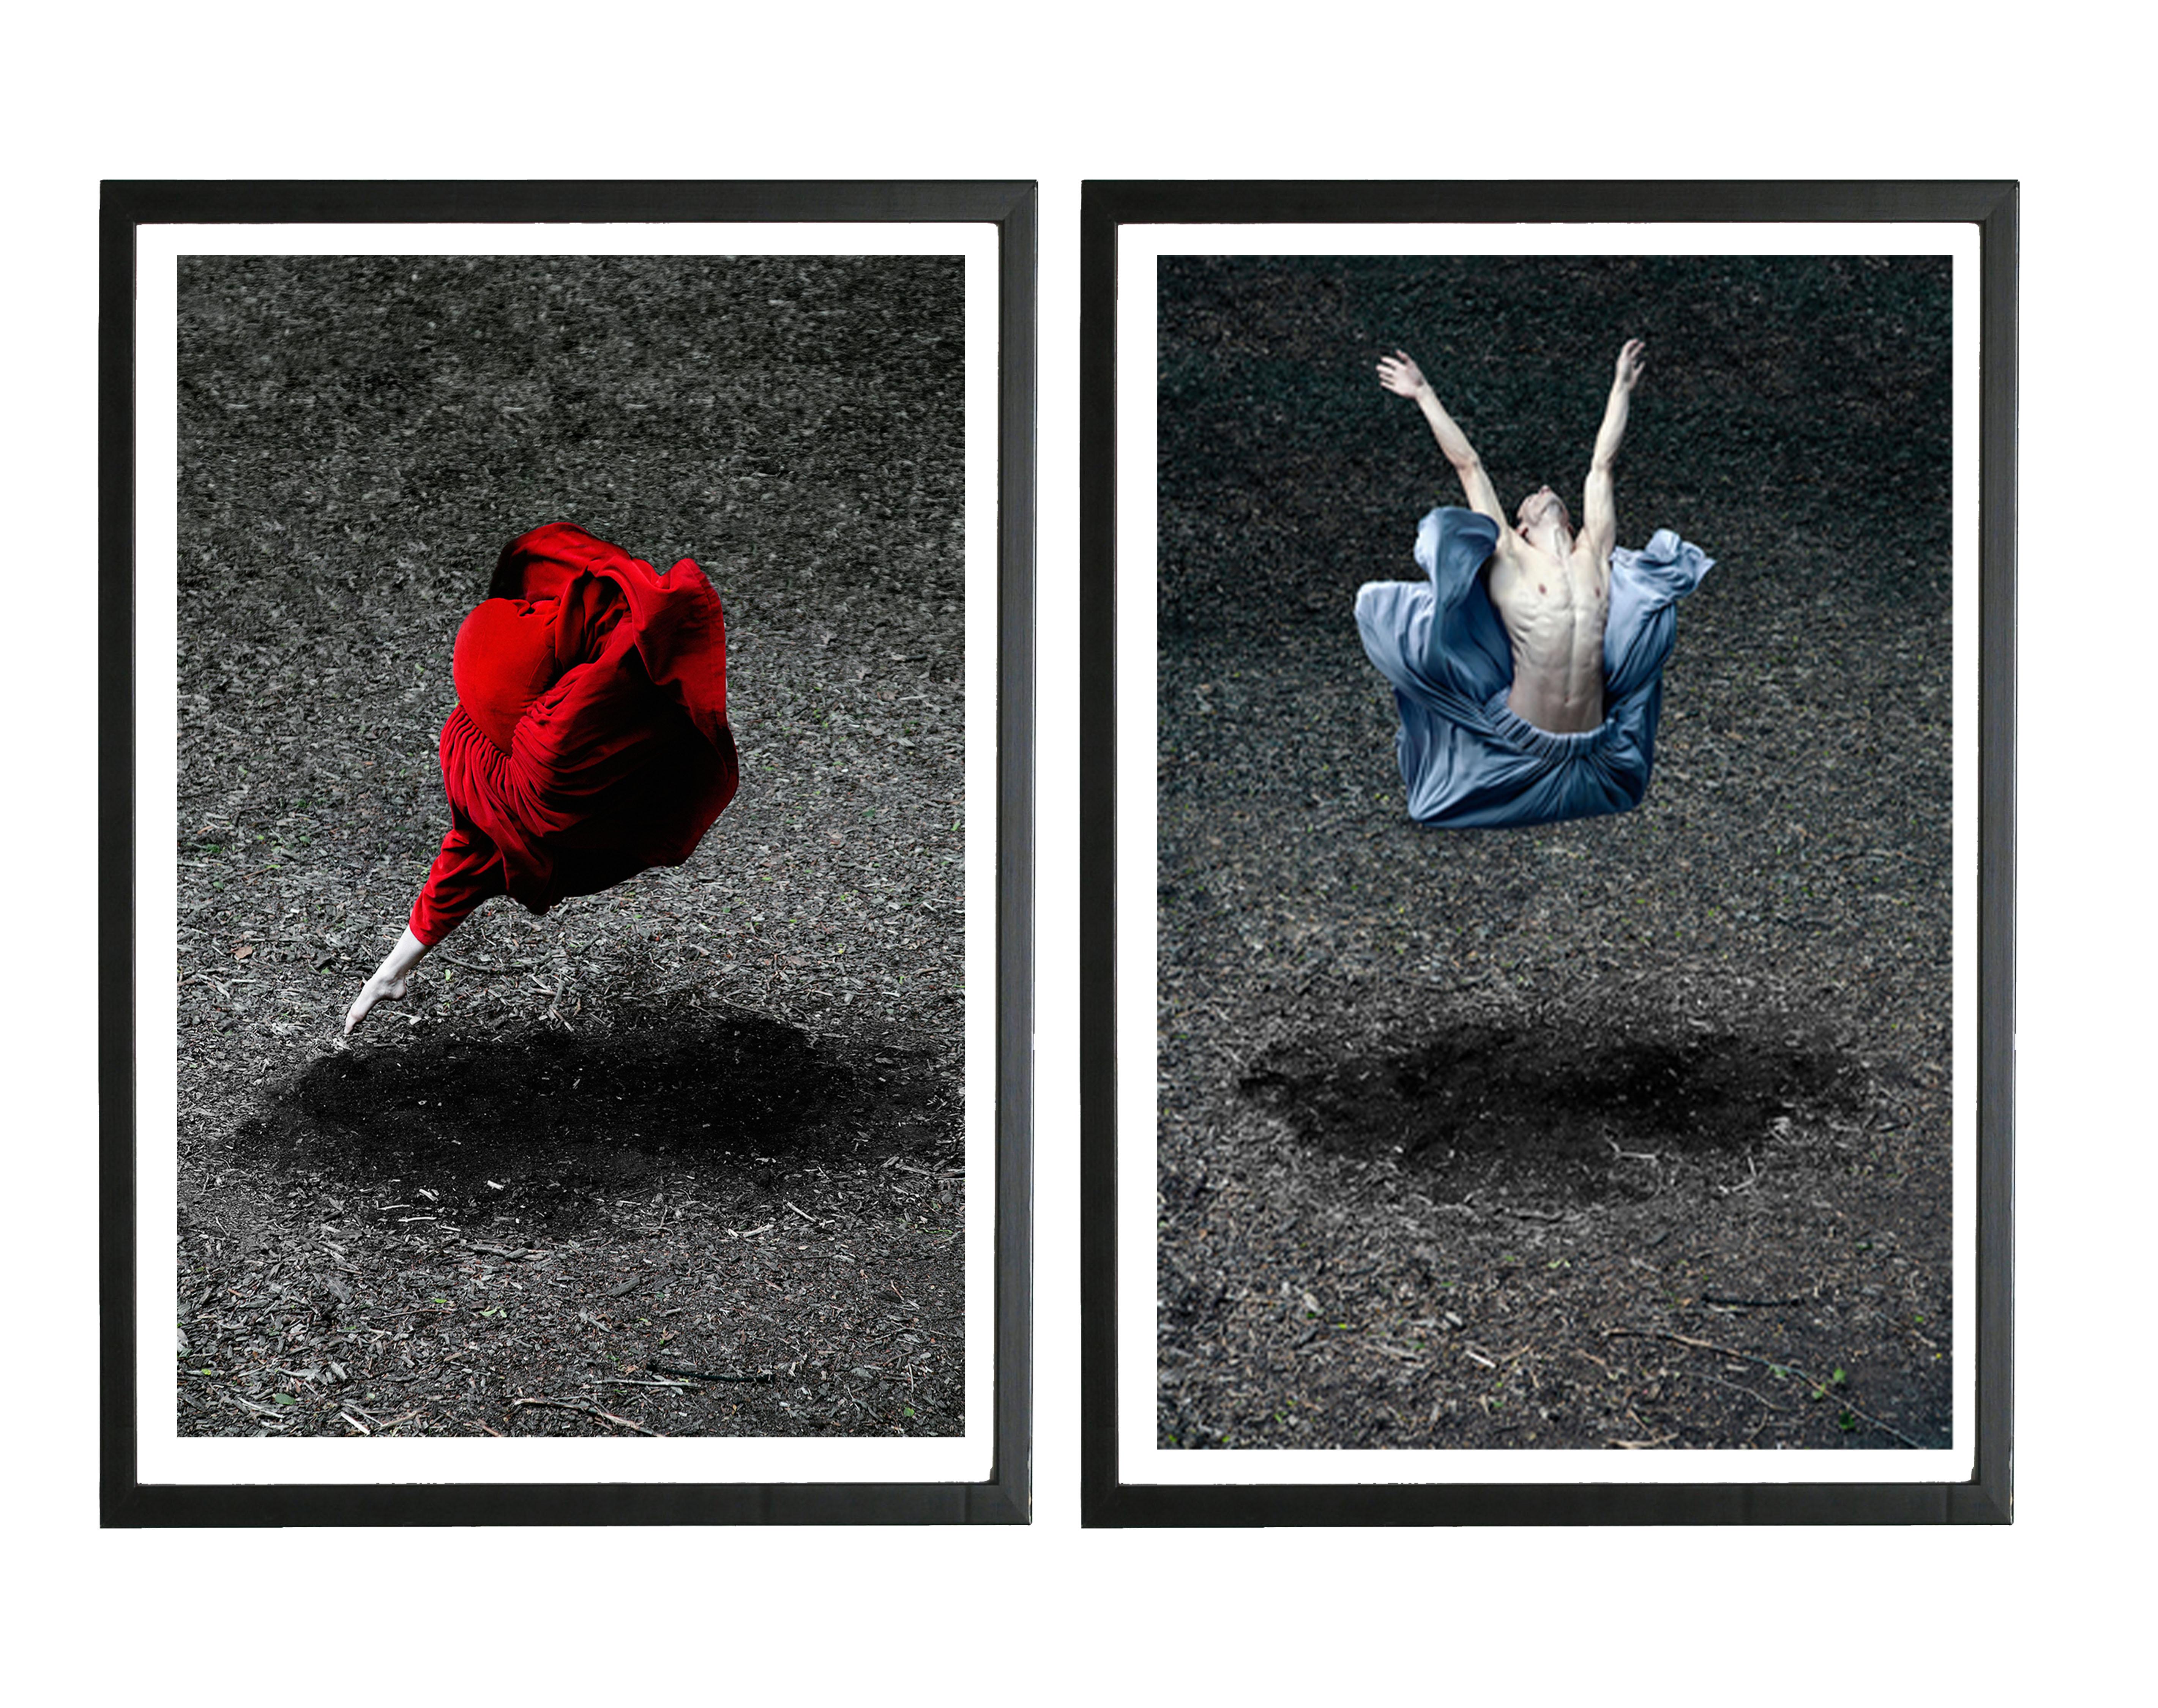 Guilherme Licurgo Figurative Photograph - Desert Rose and Blooming Flower I. Diptych. Framed